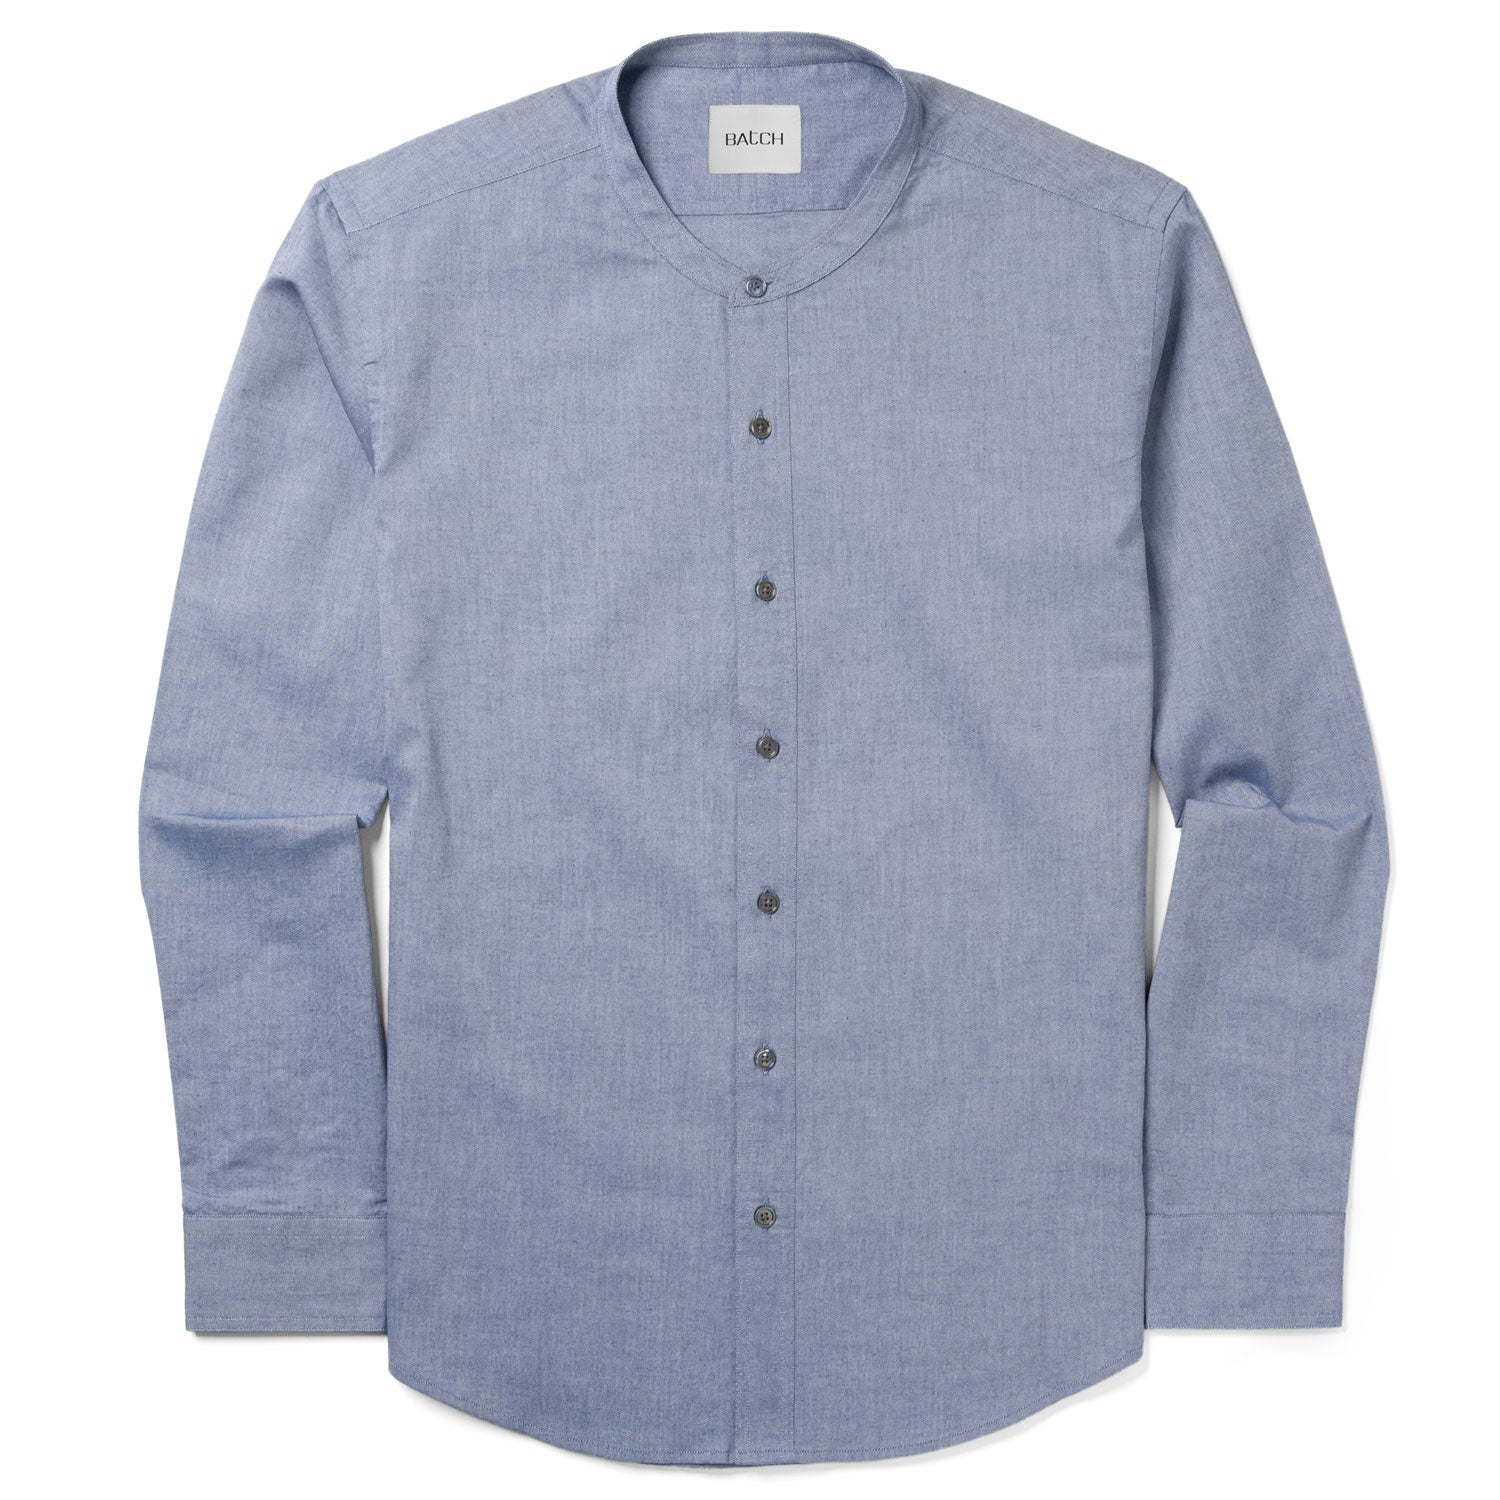 Essential Band Collar Button Down Shirt - Navy Cotton Oxford